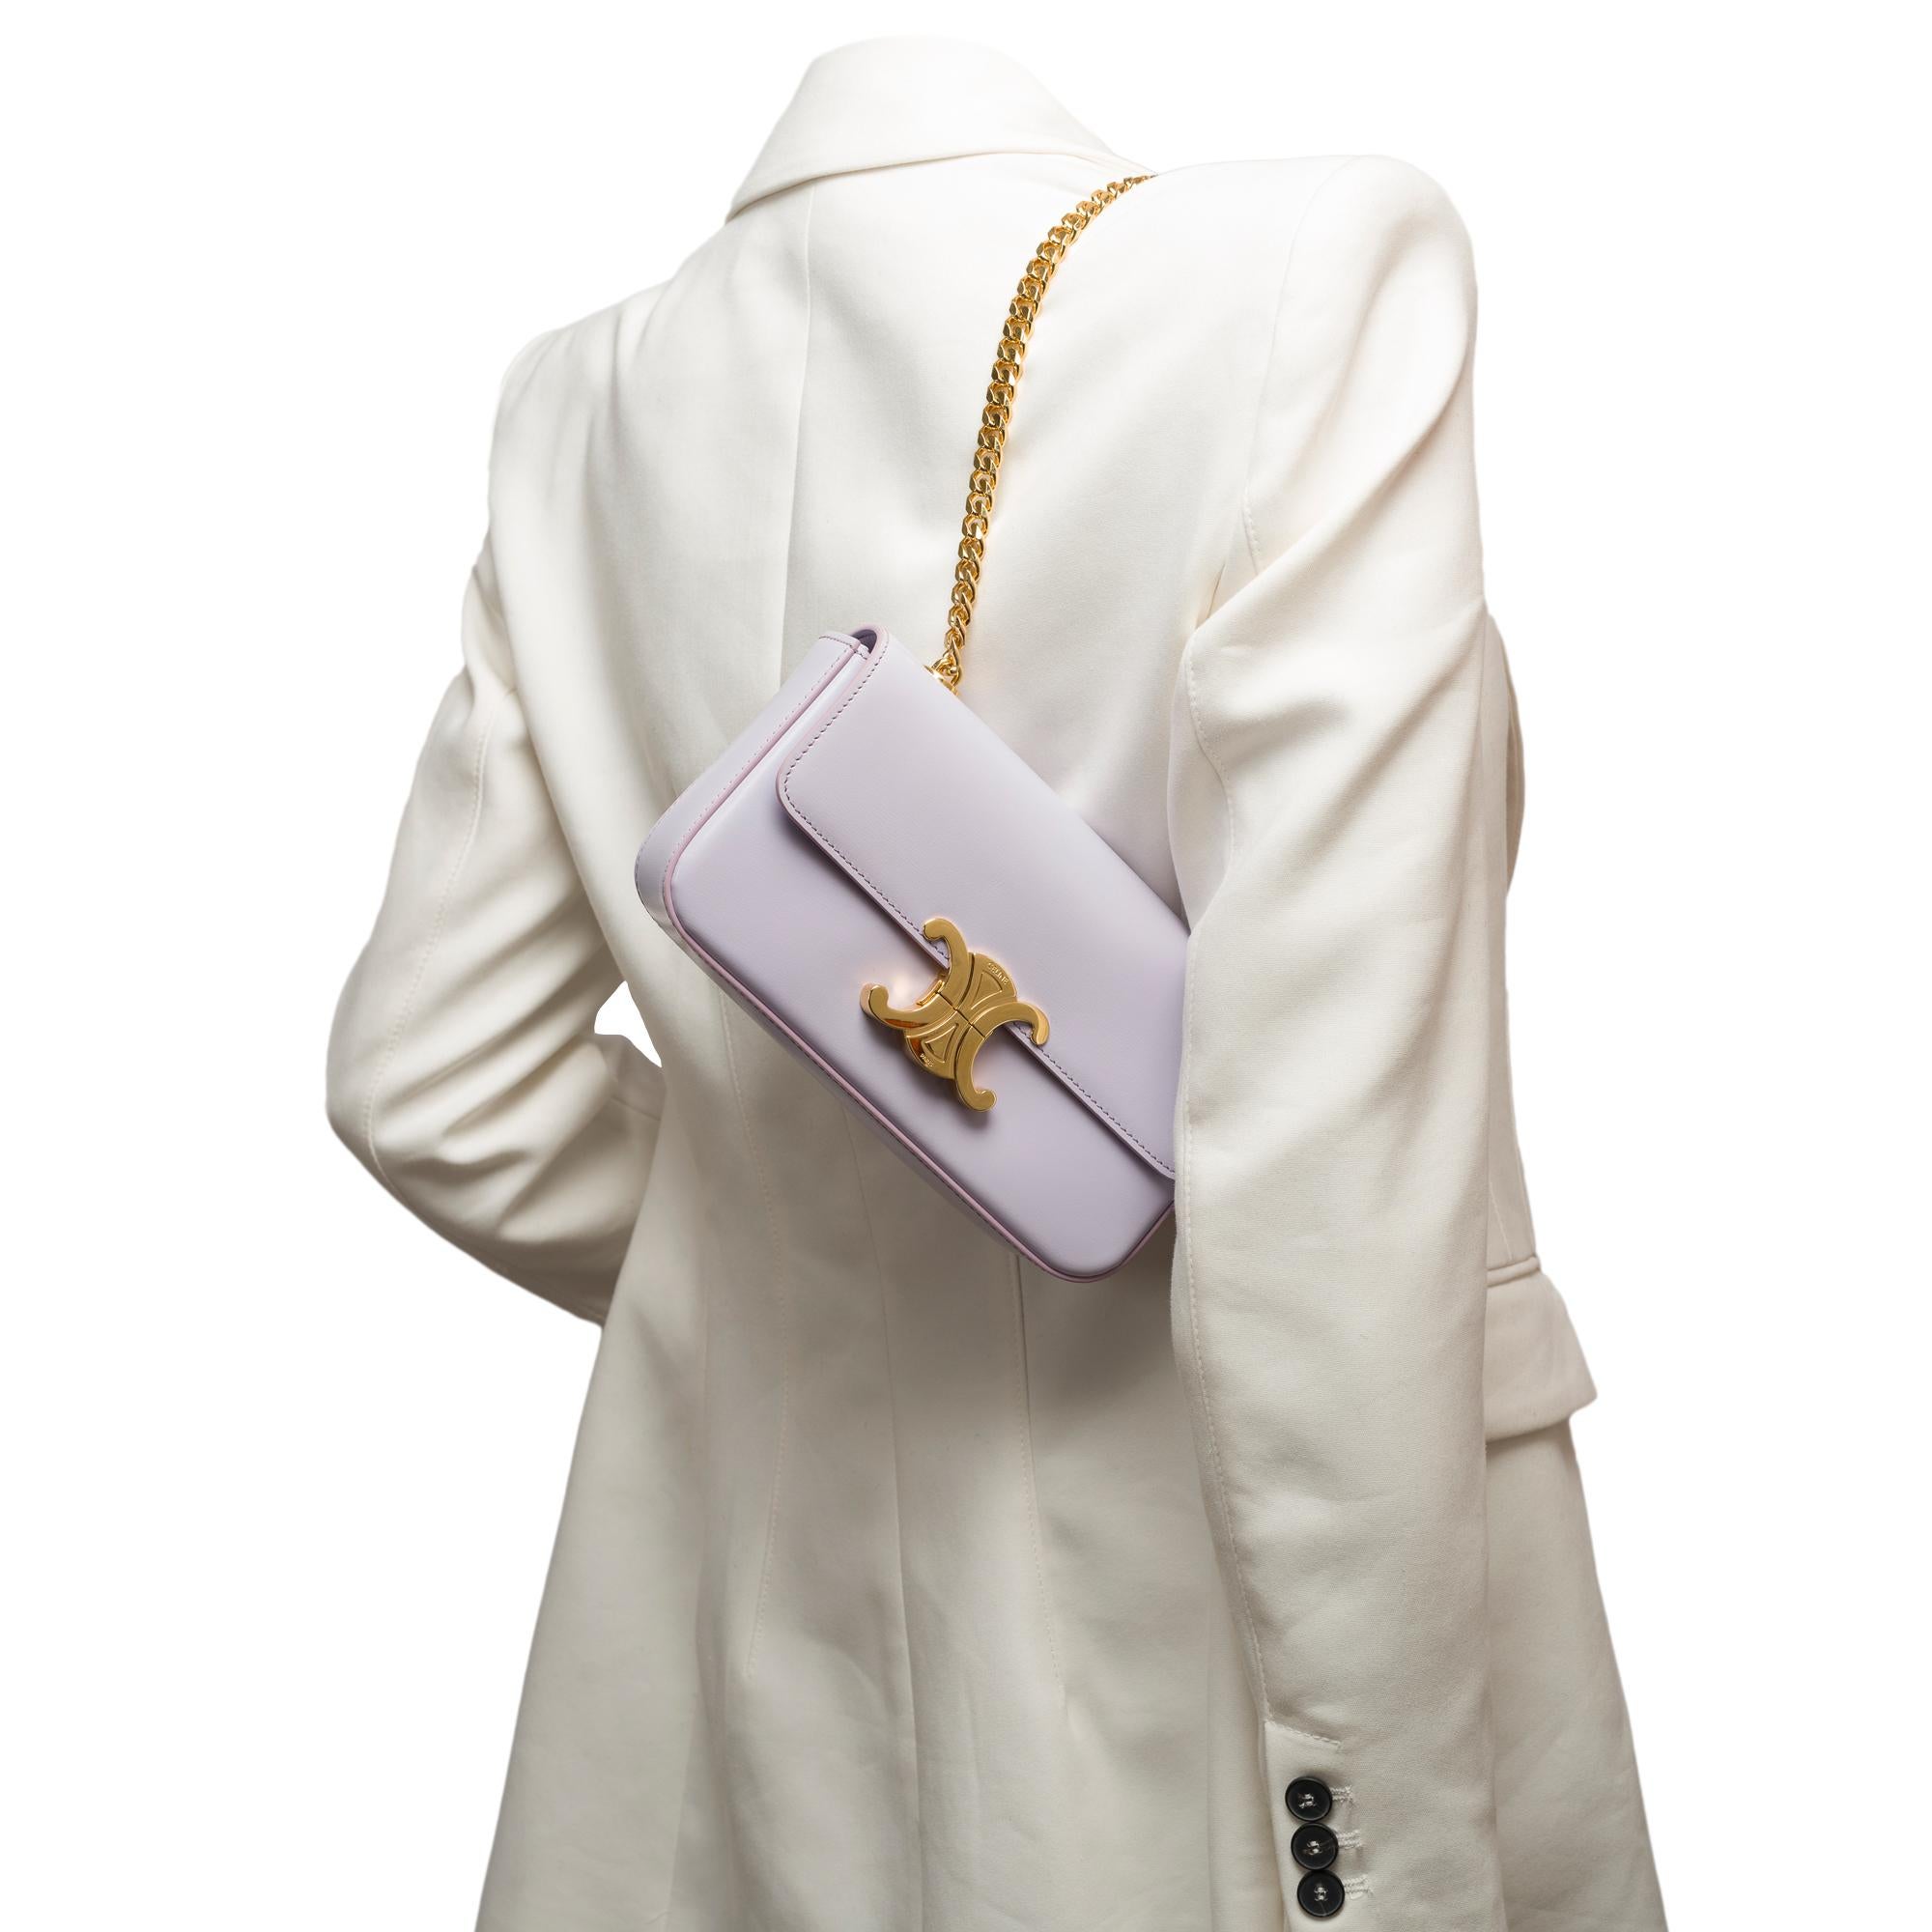 Celine Triomphe shoulder flap bag in satin lilac calf leather, GHW For Sale 8